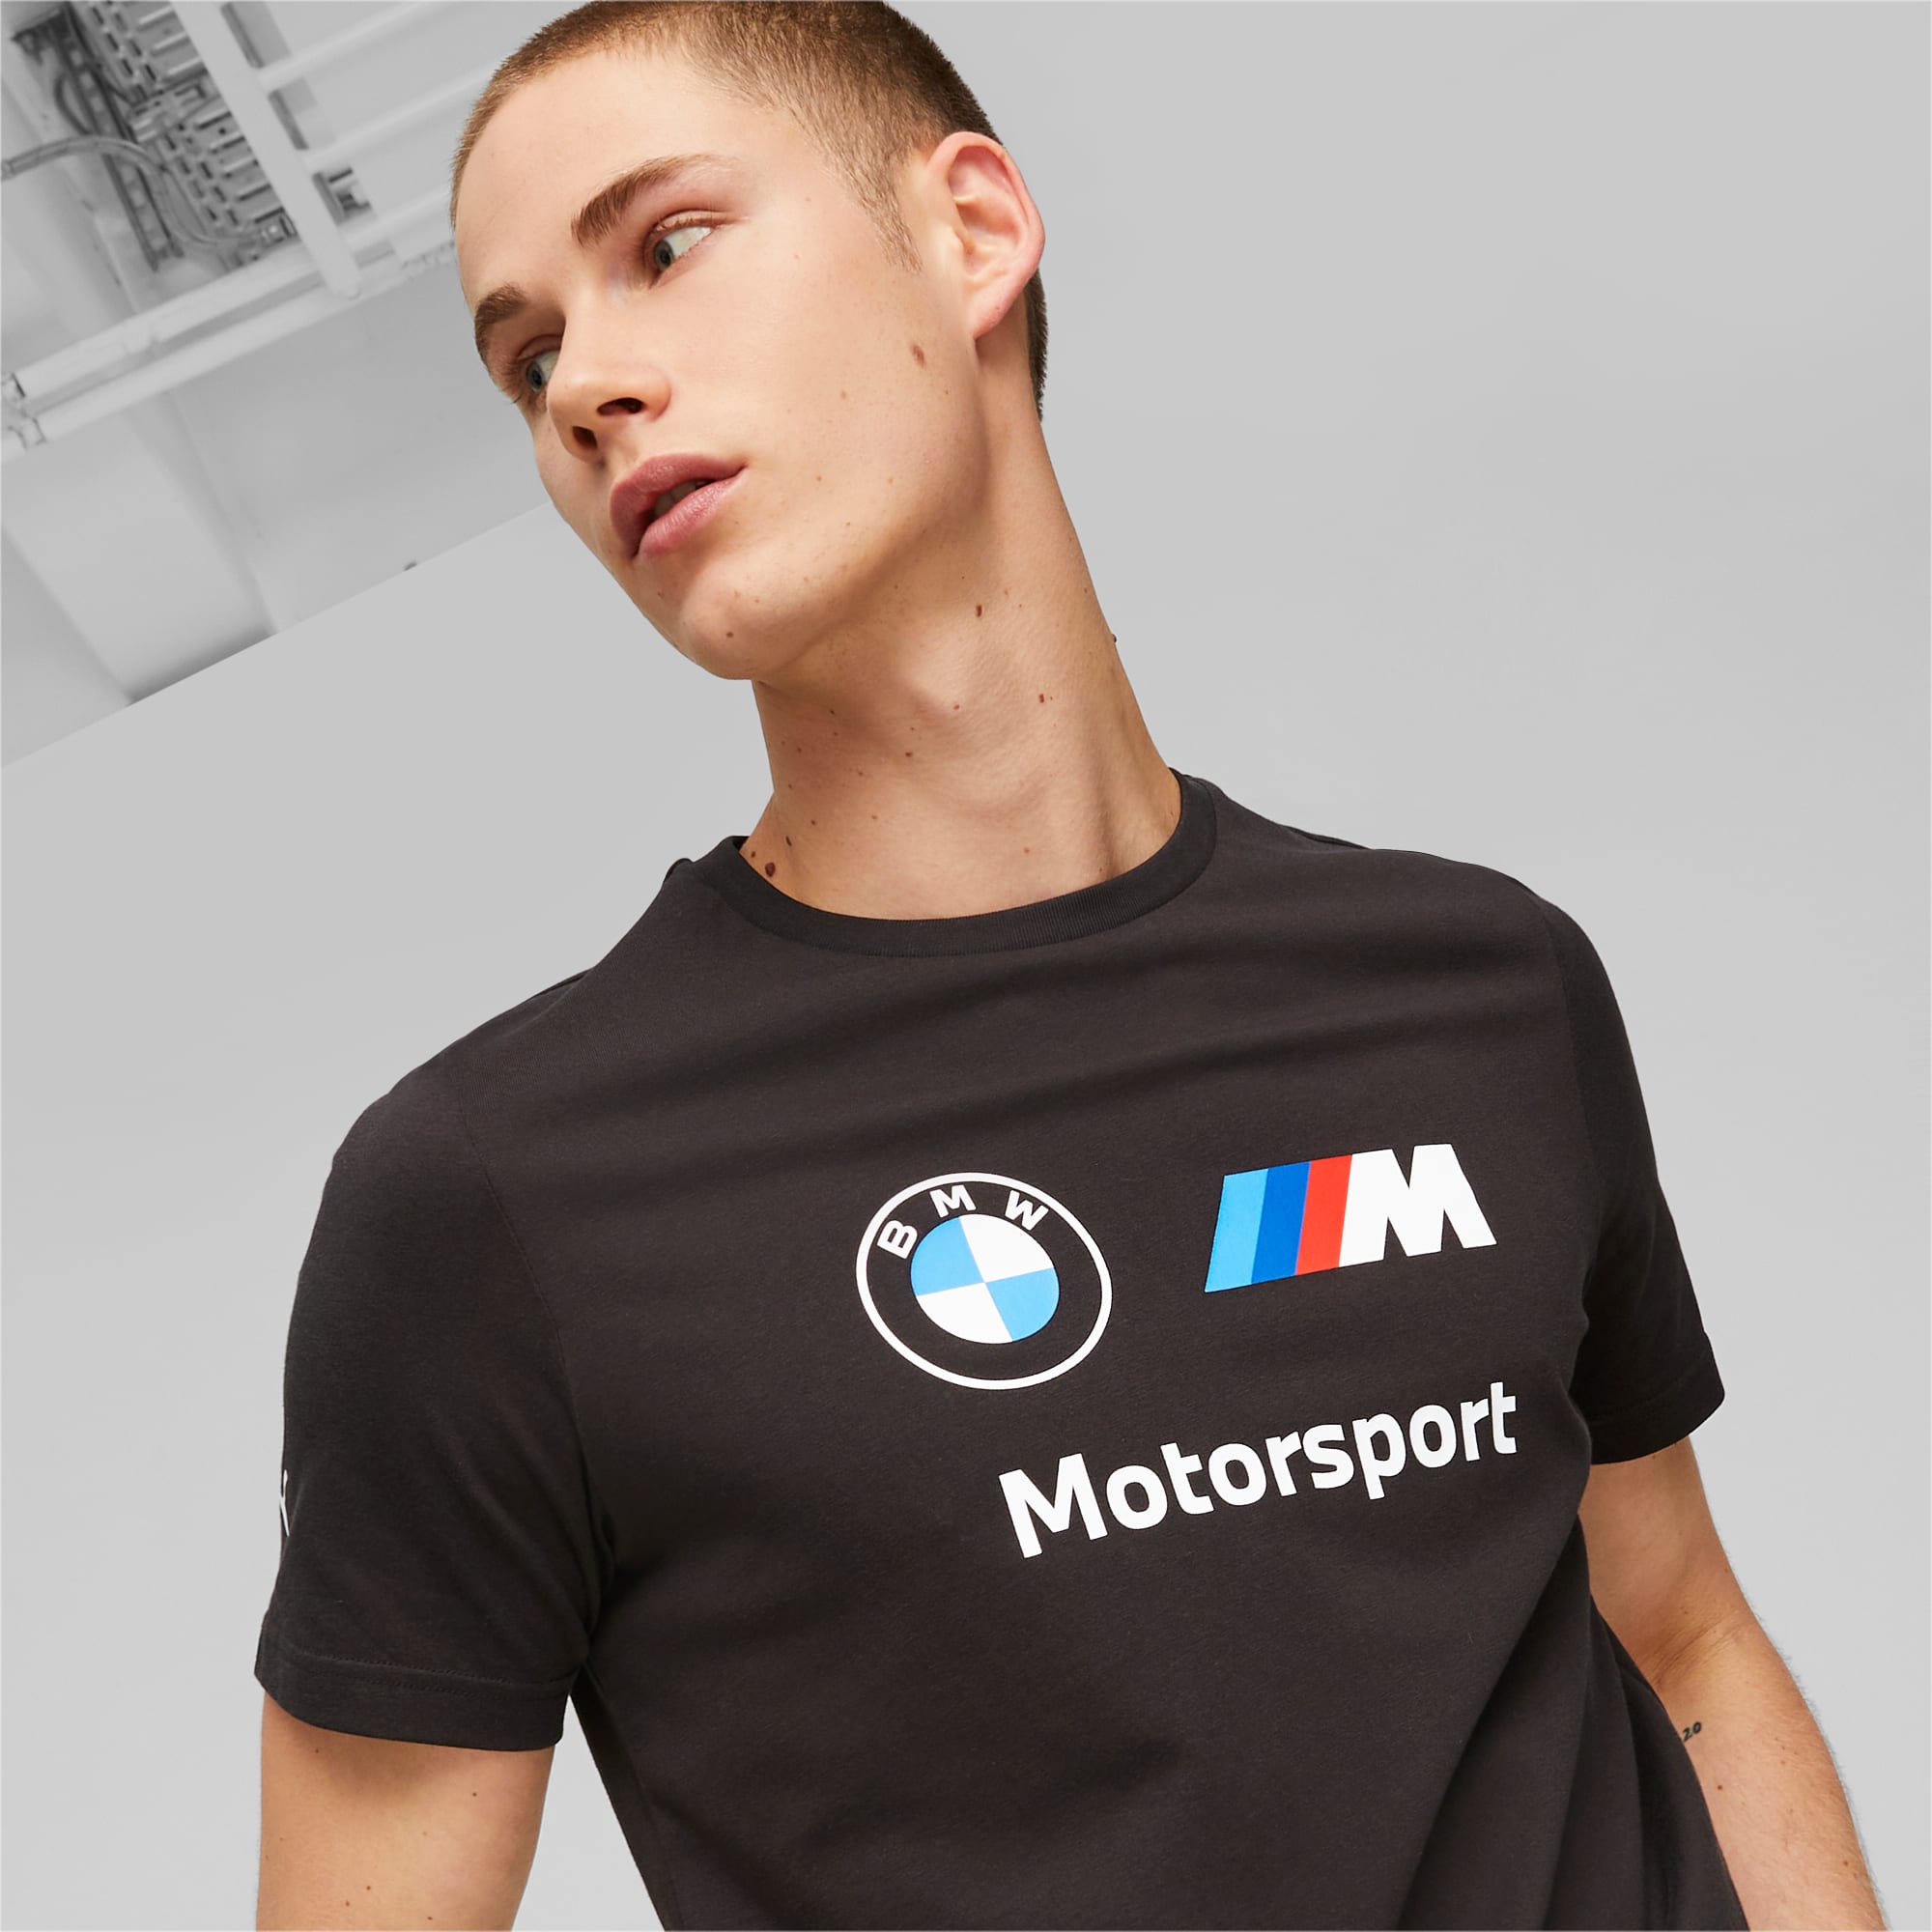 BMW Motorsport Tshirt by Puma Graphic Black - Men